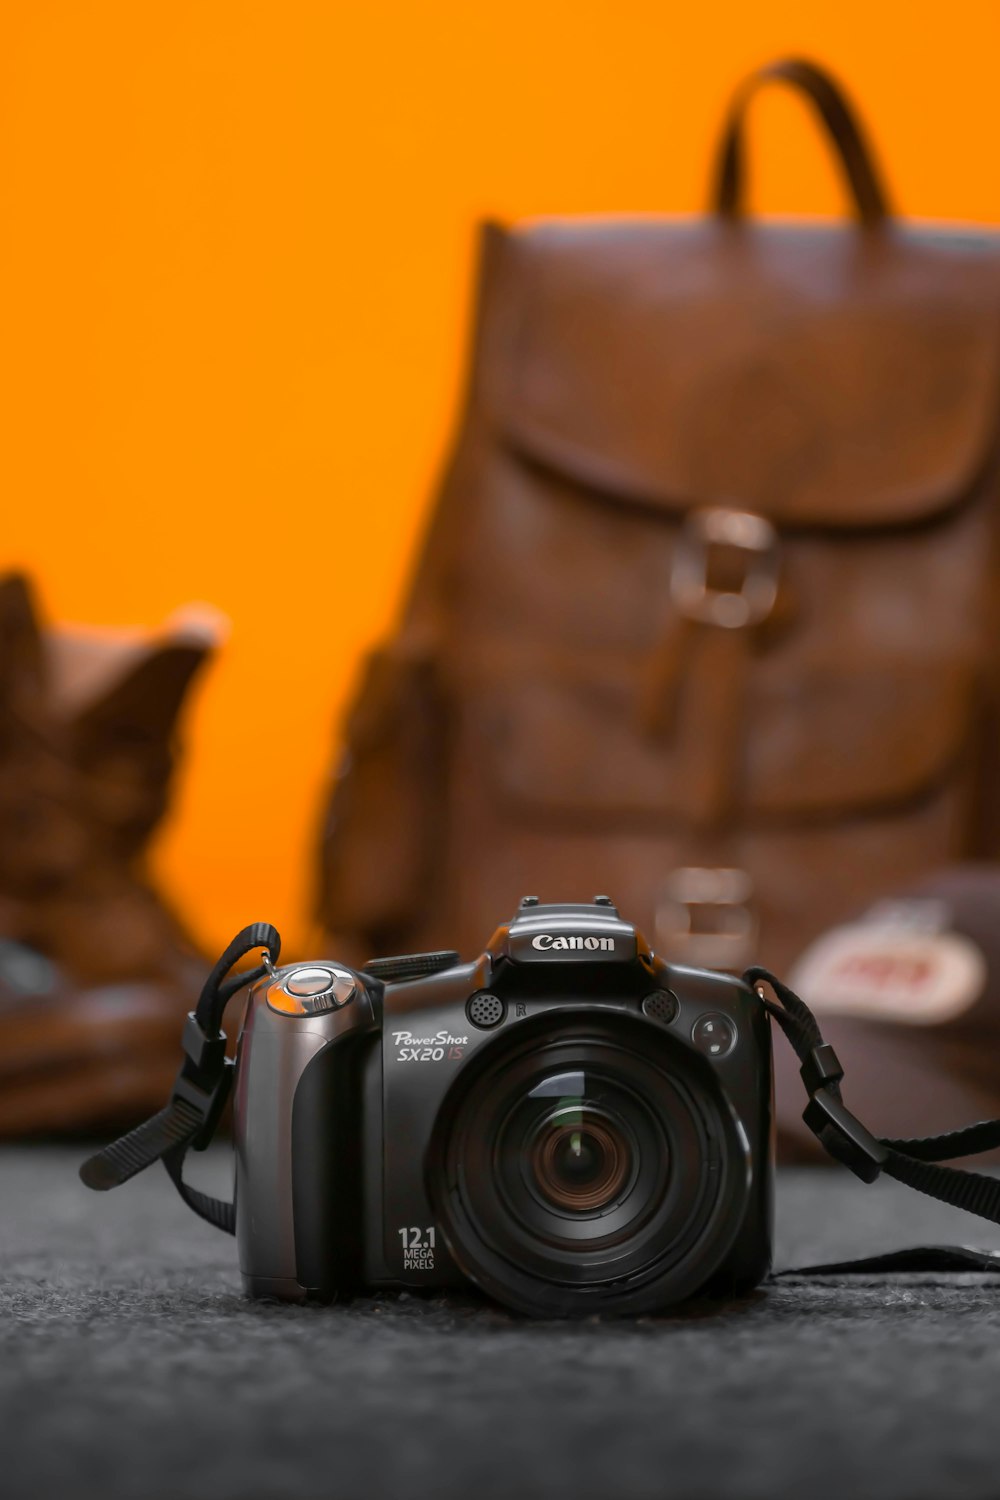 black nikon dslr camera on brown leather bag